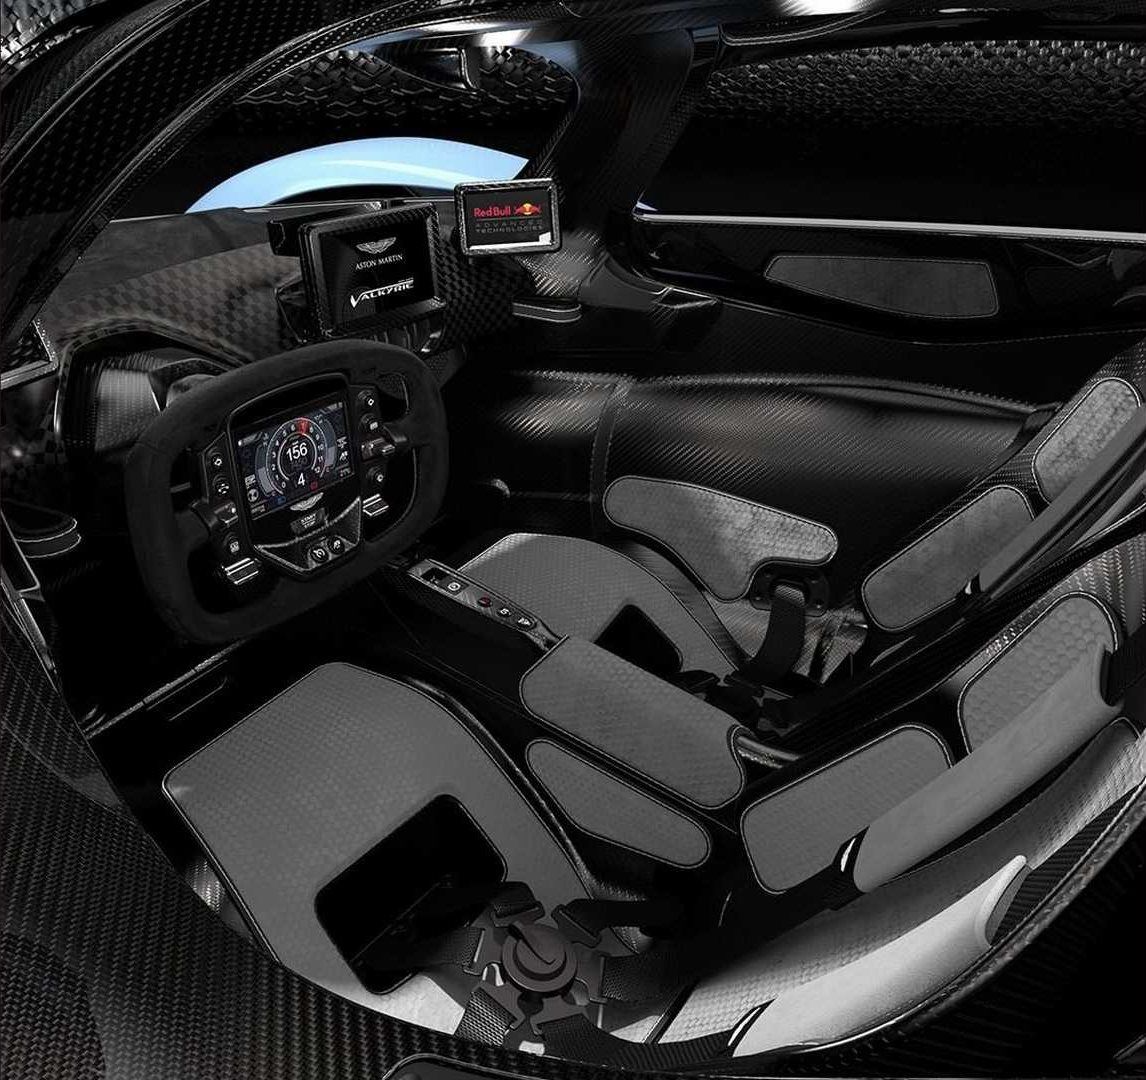 Aston Martin Reveals Stylish Valkyrie Hypercar With Stunning Photos